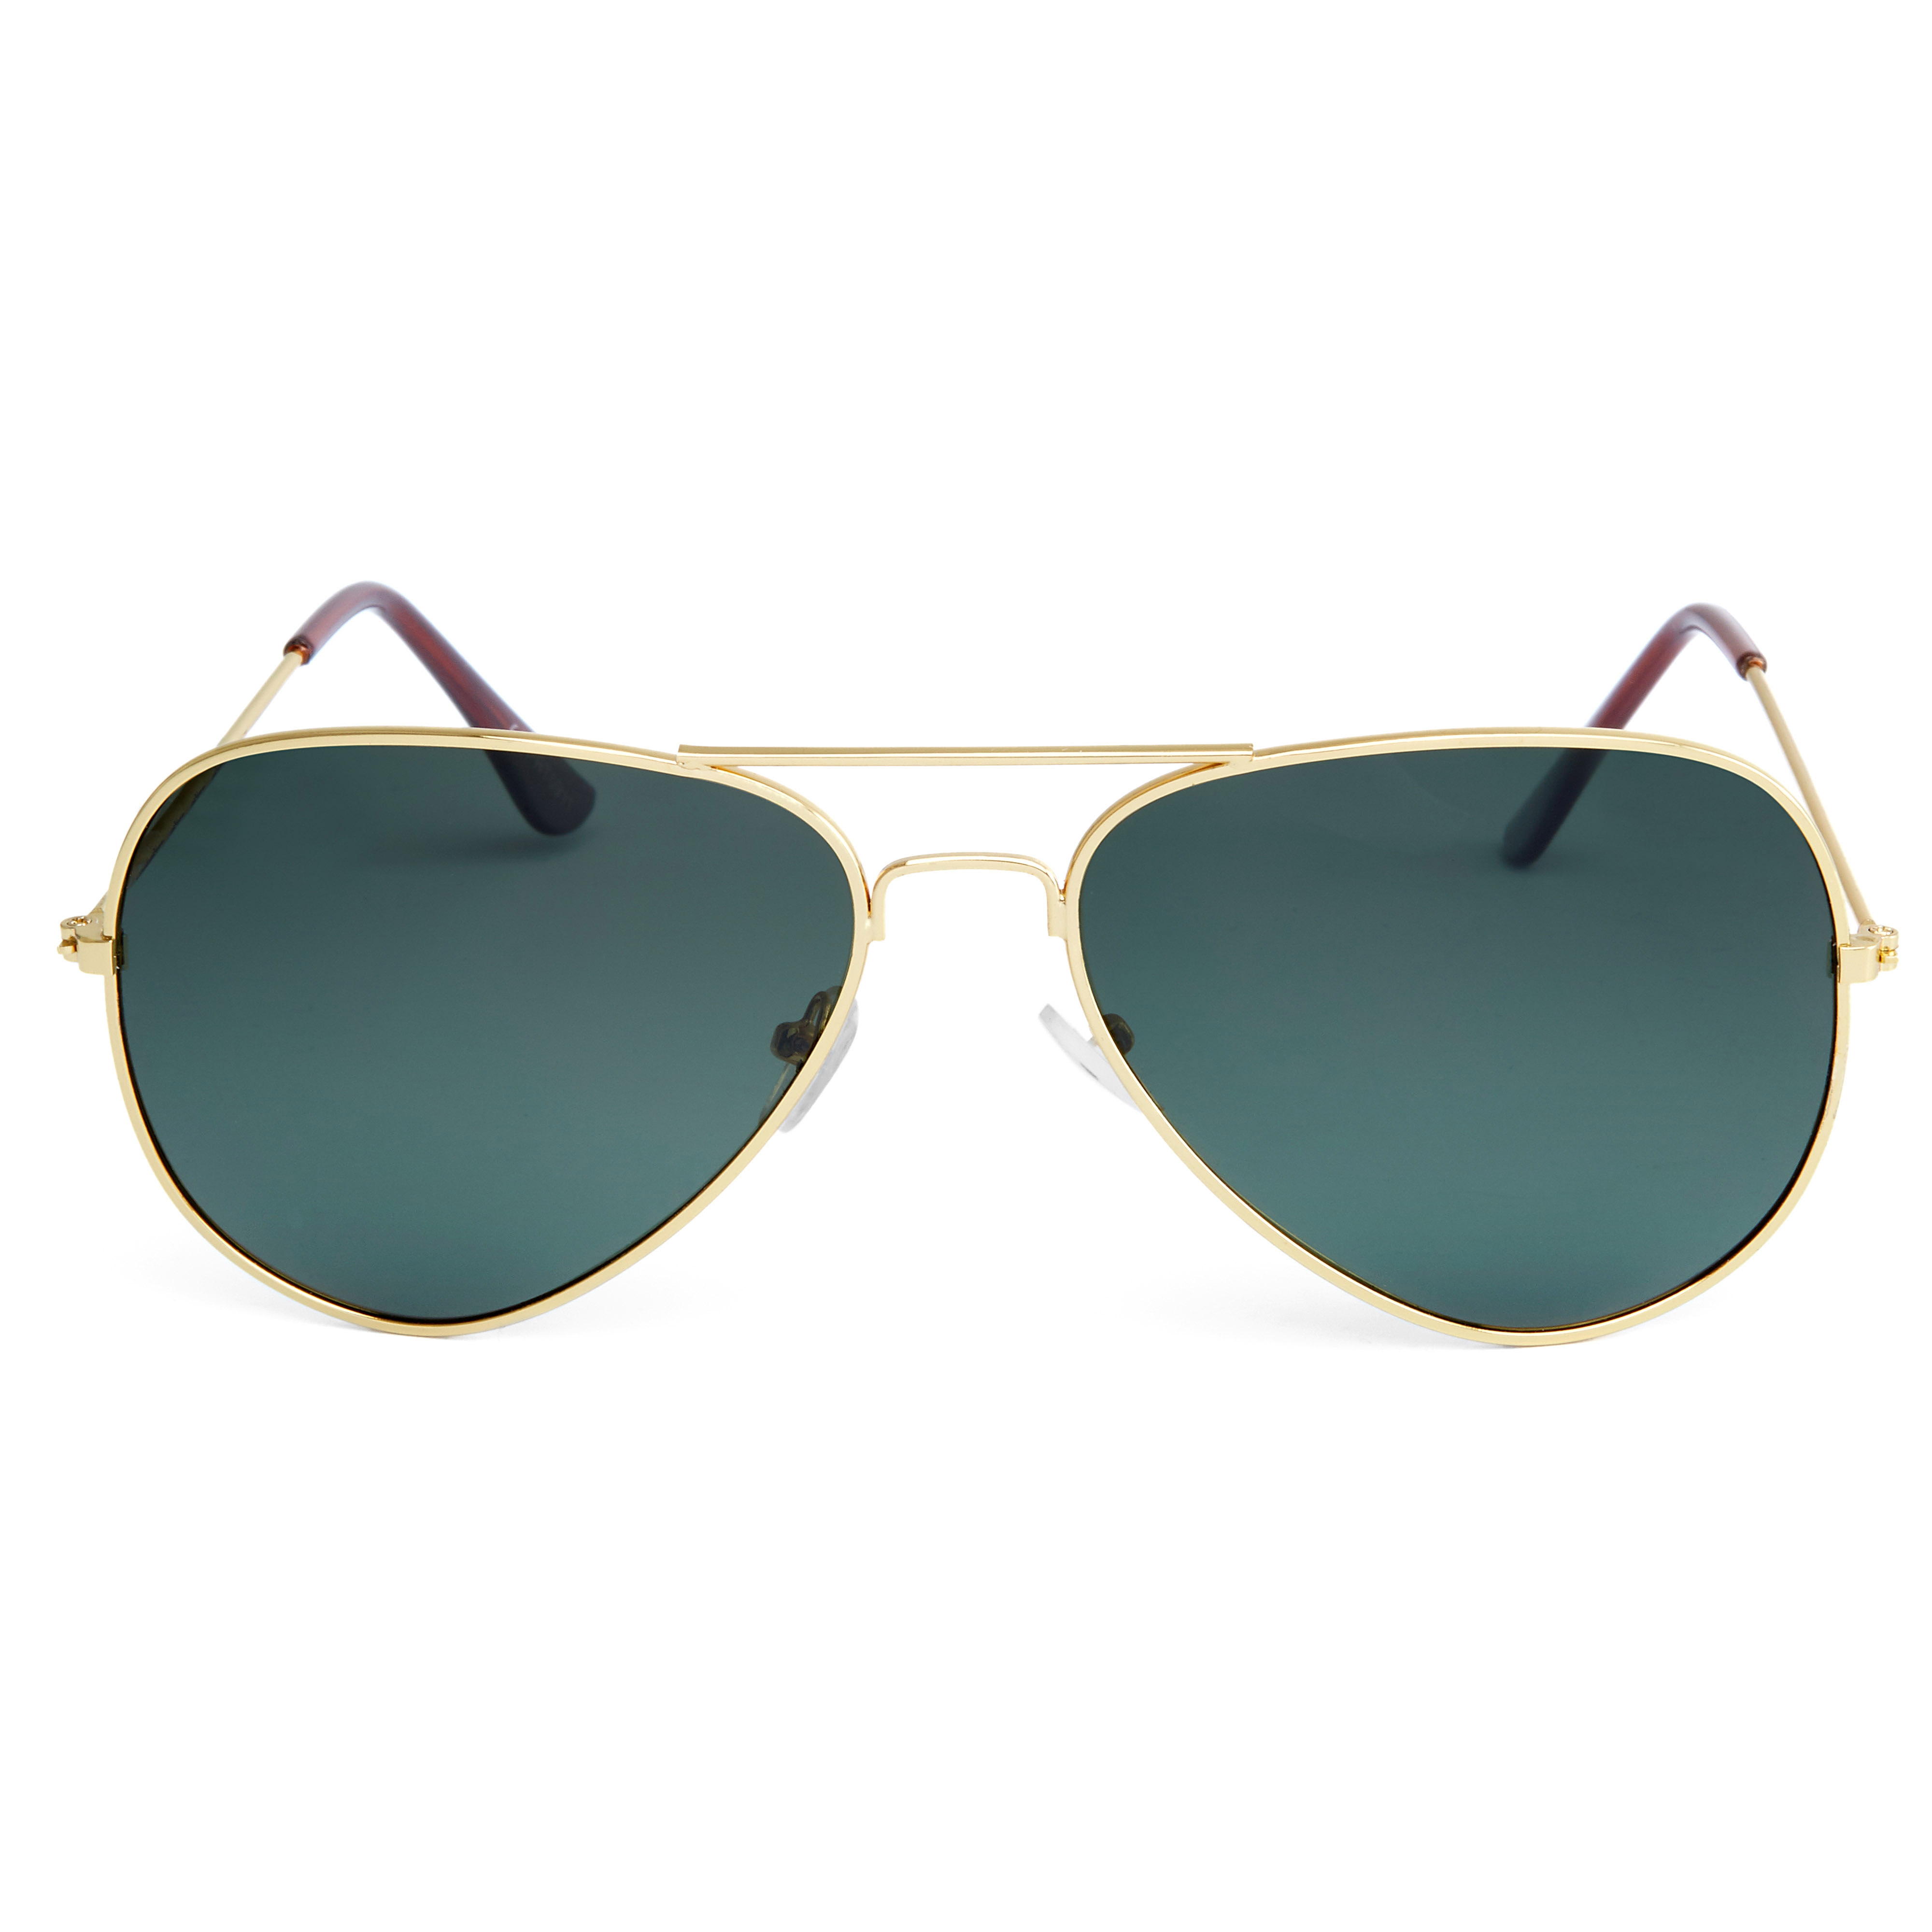 Brown Aviator Sunglasses, In stock!